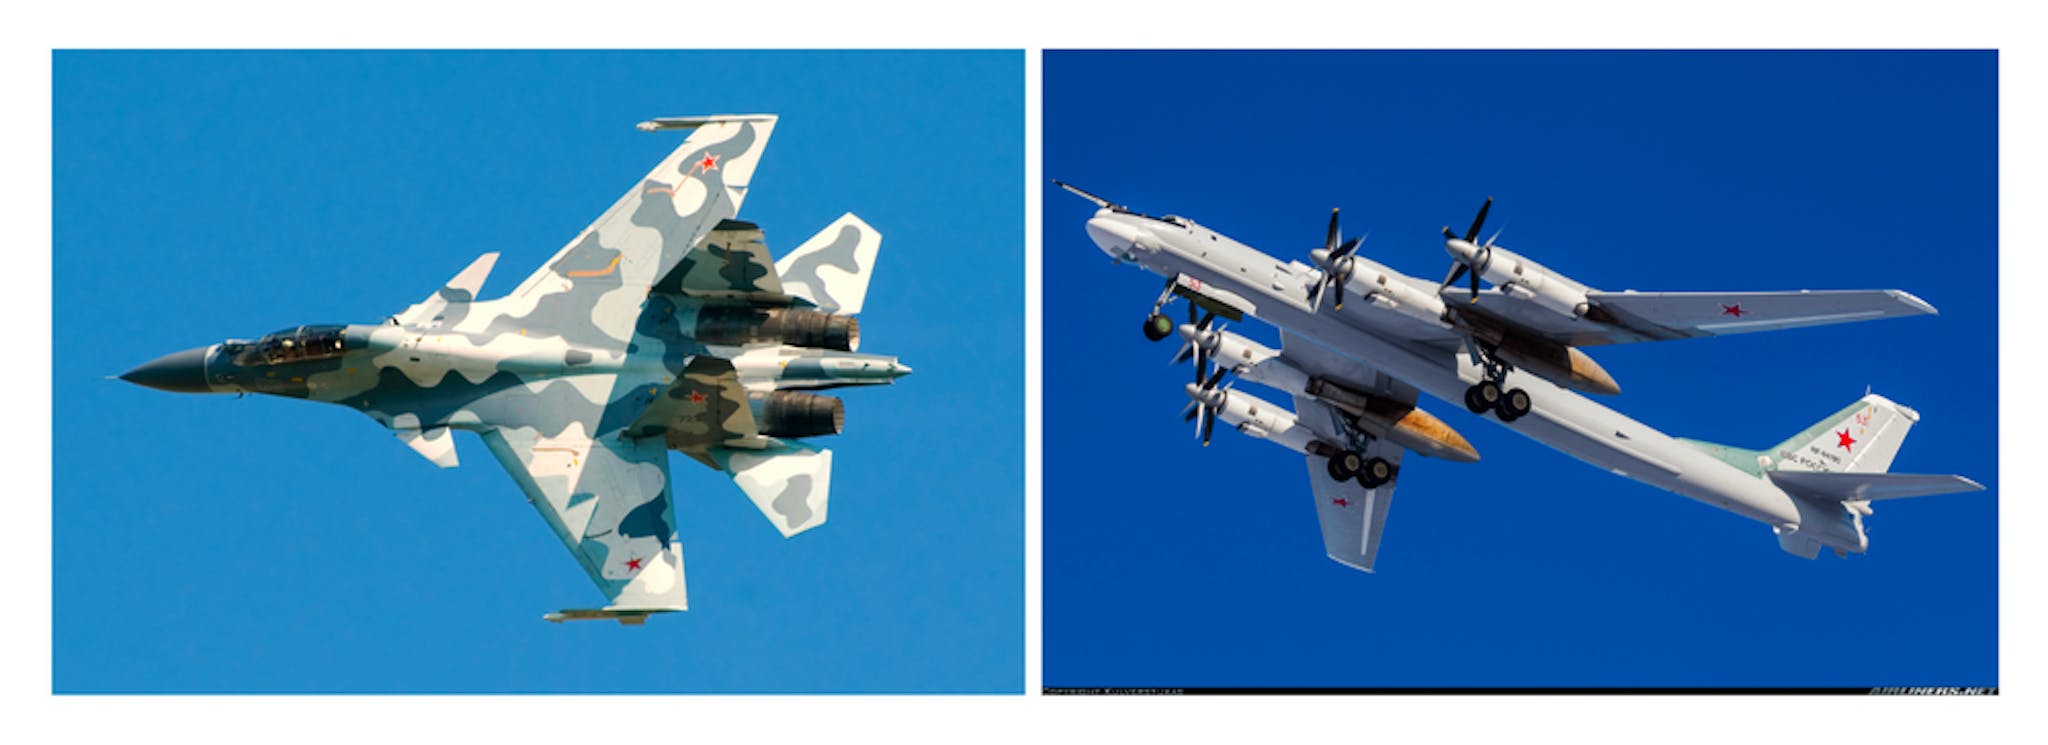 从左到右：(1) Su-30、(2) Tu-95